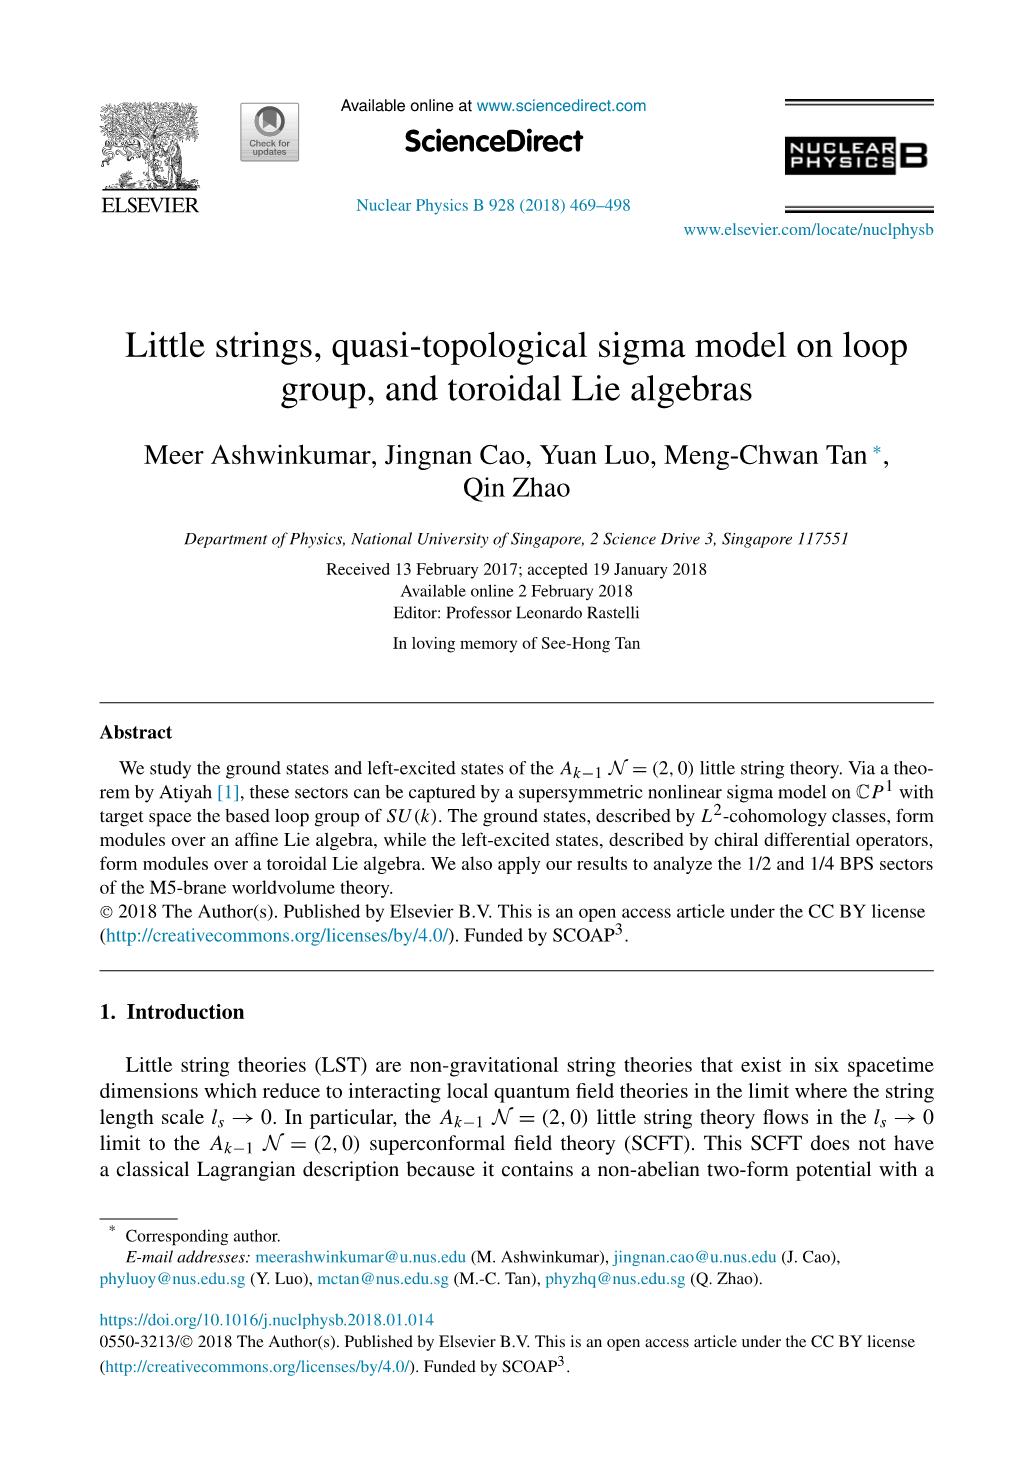 Little Strings, Quasi-Topological Sigma Model on Loop Group, and Toroidal Lie Algebras